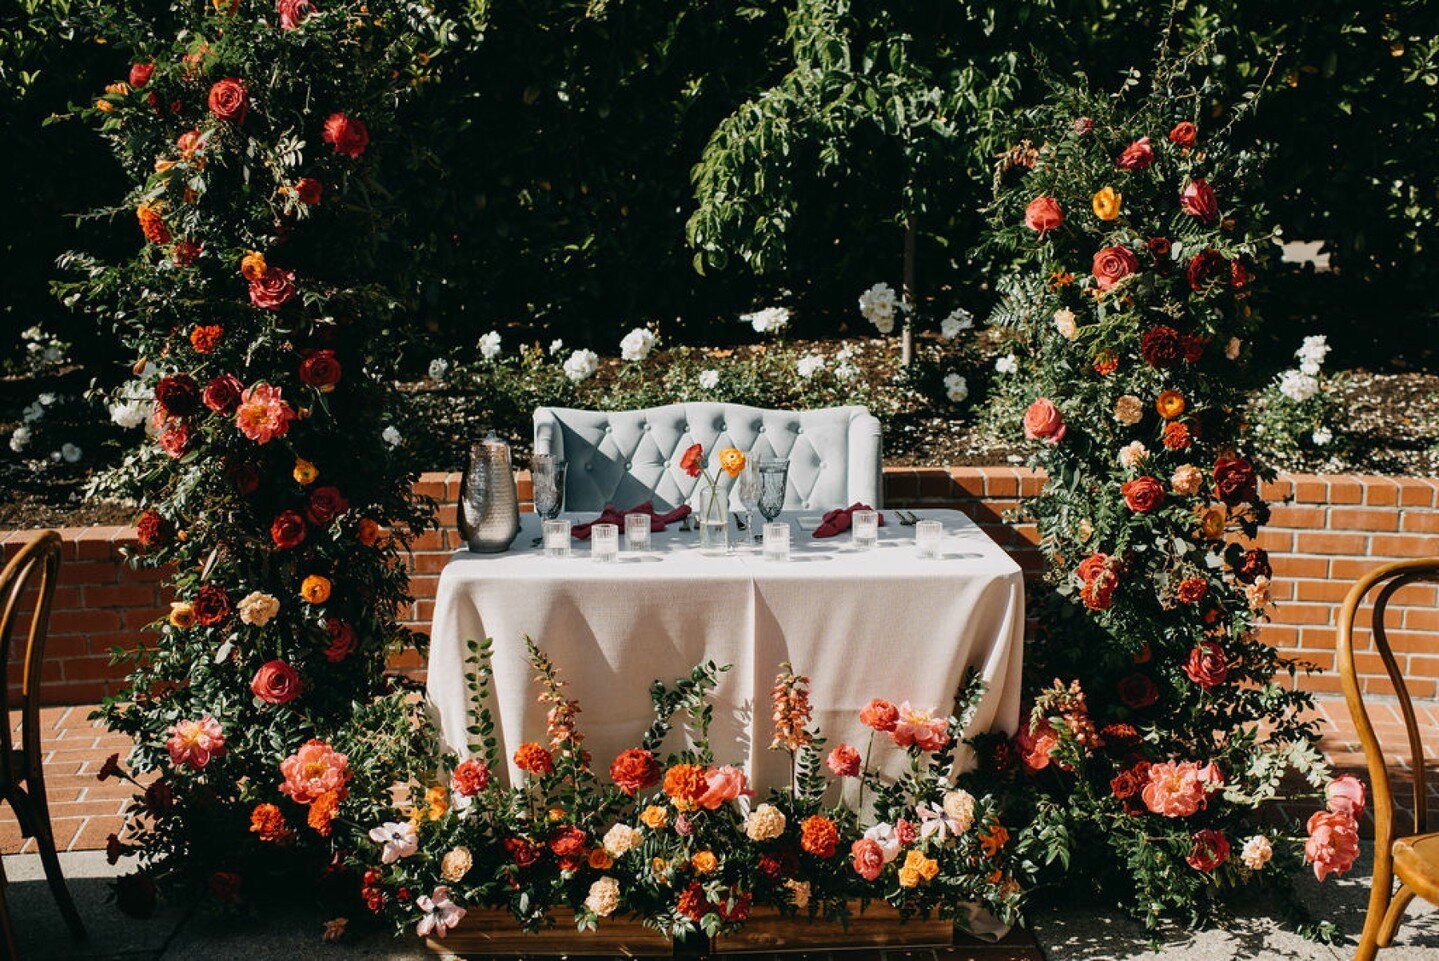 Vibrant hues with a hacienda charm 😍

#weddings #weddingseason #weddingdesign